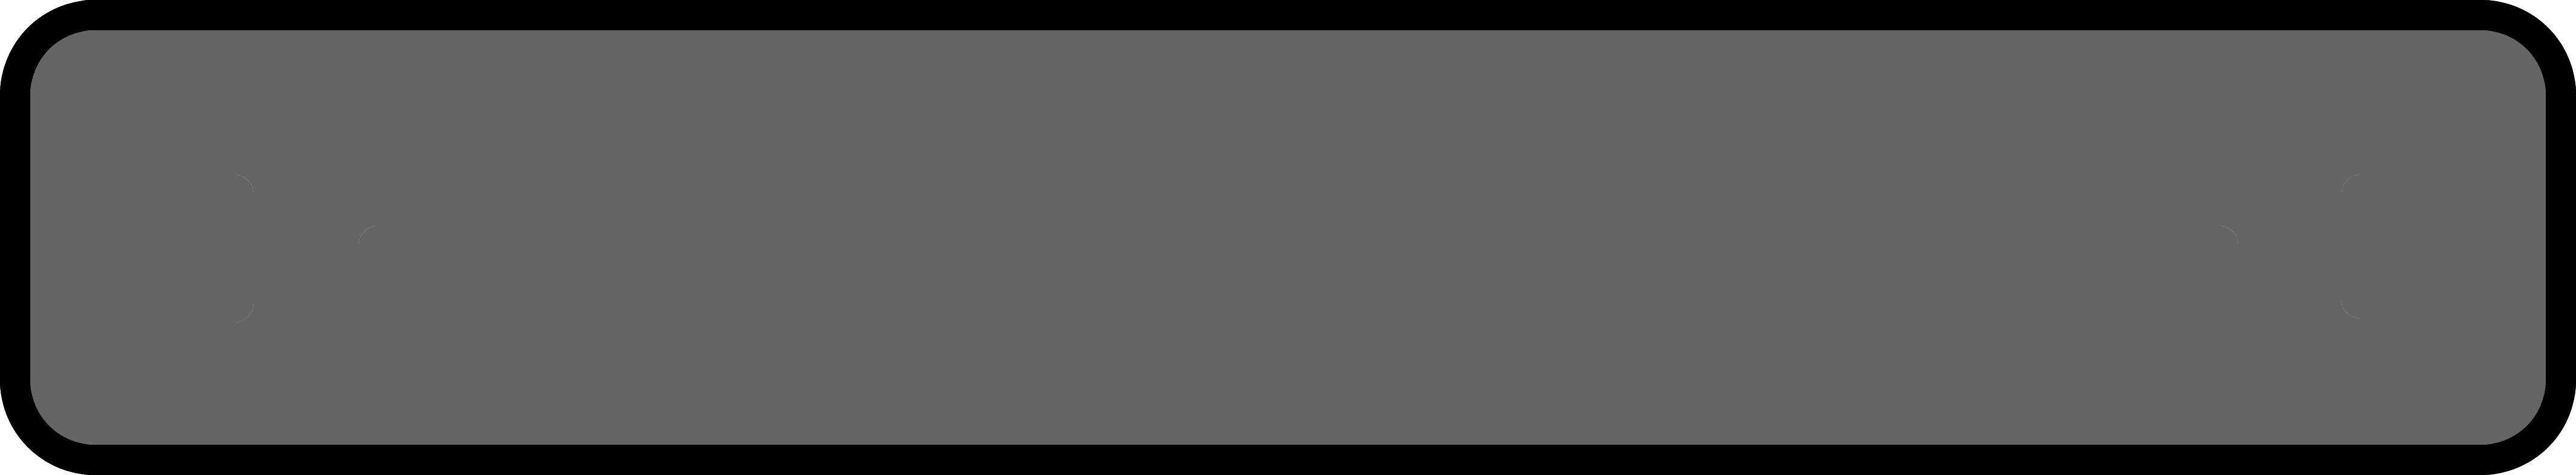 Image of a Fiberon Solid Edge Board Side Profile